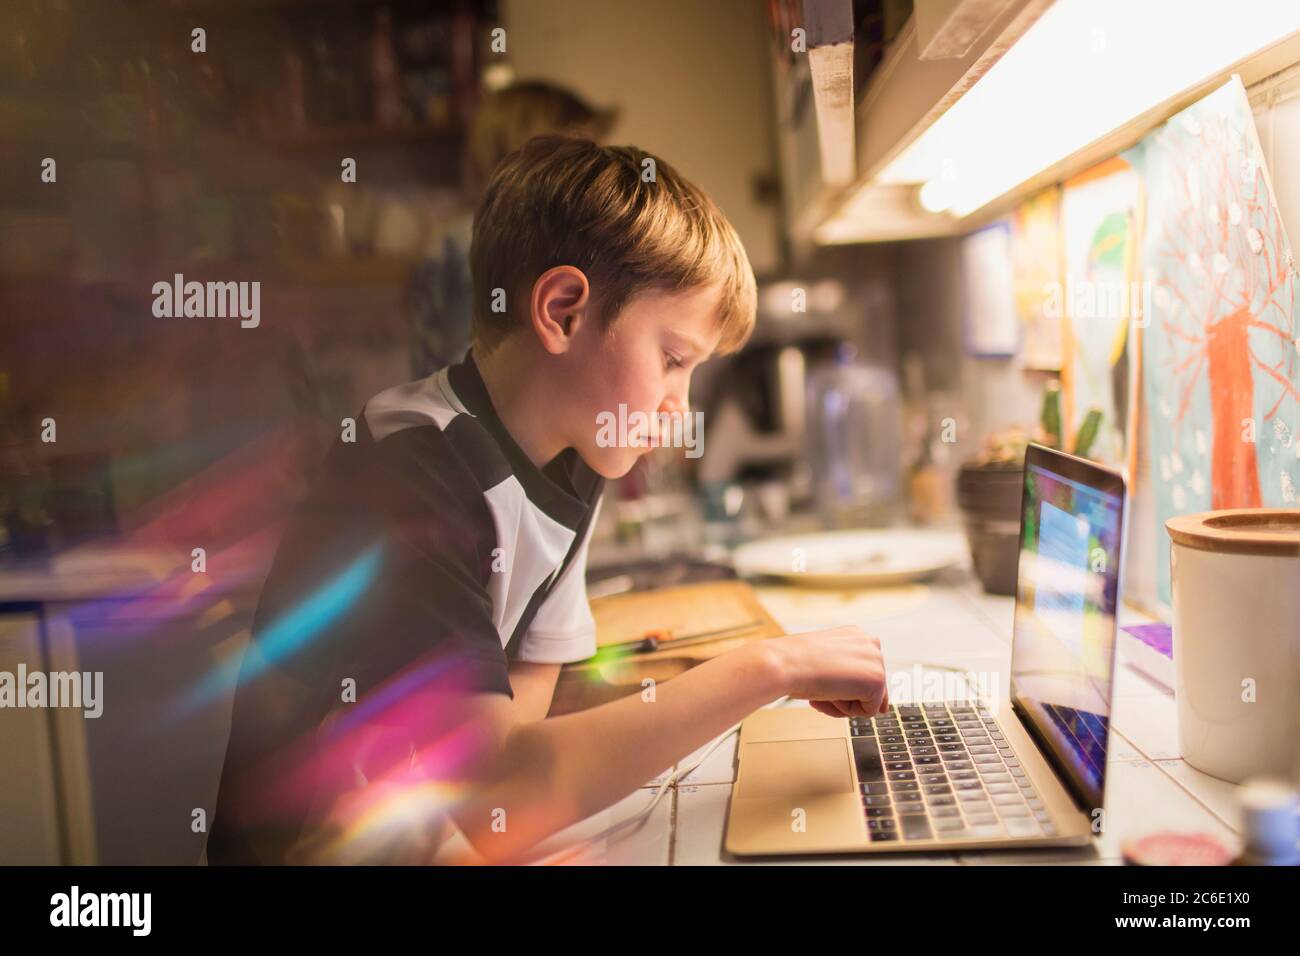 Focused boy doing homework at laptop in kitchen Stock Photo